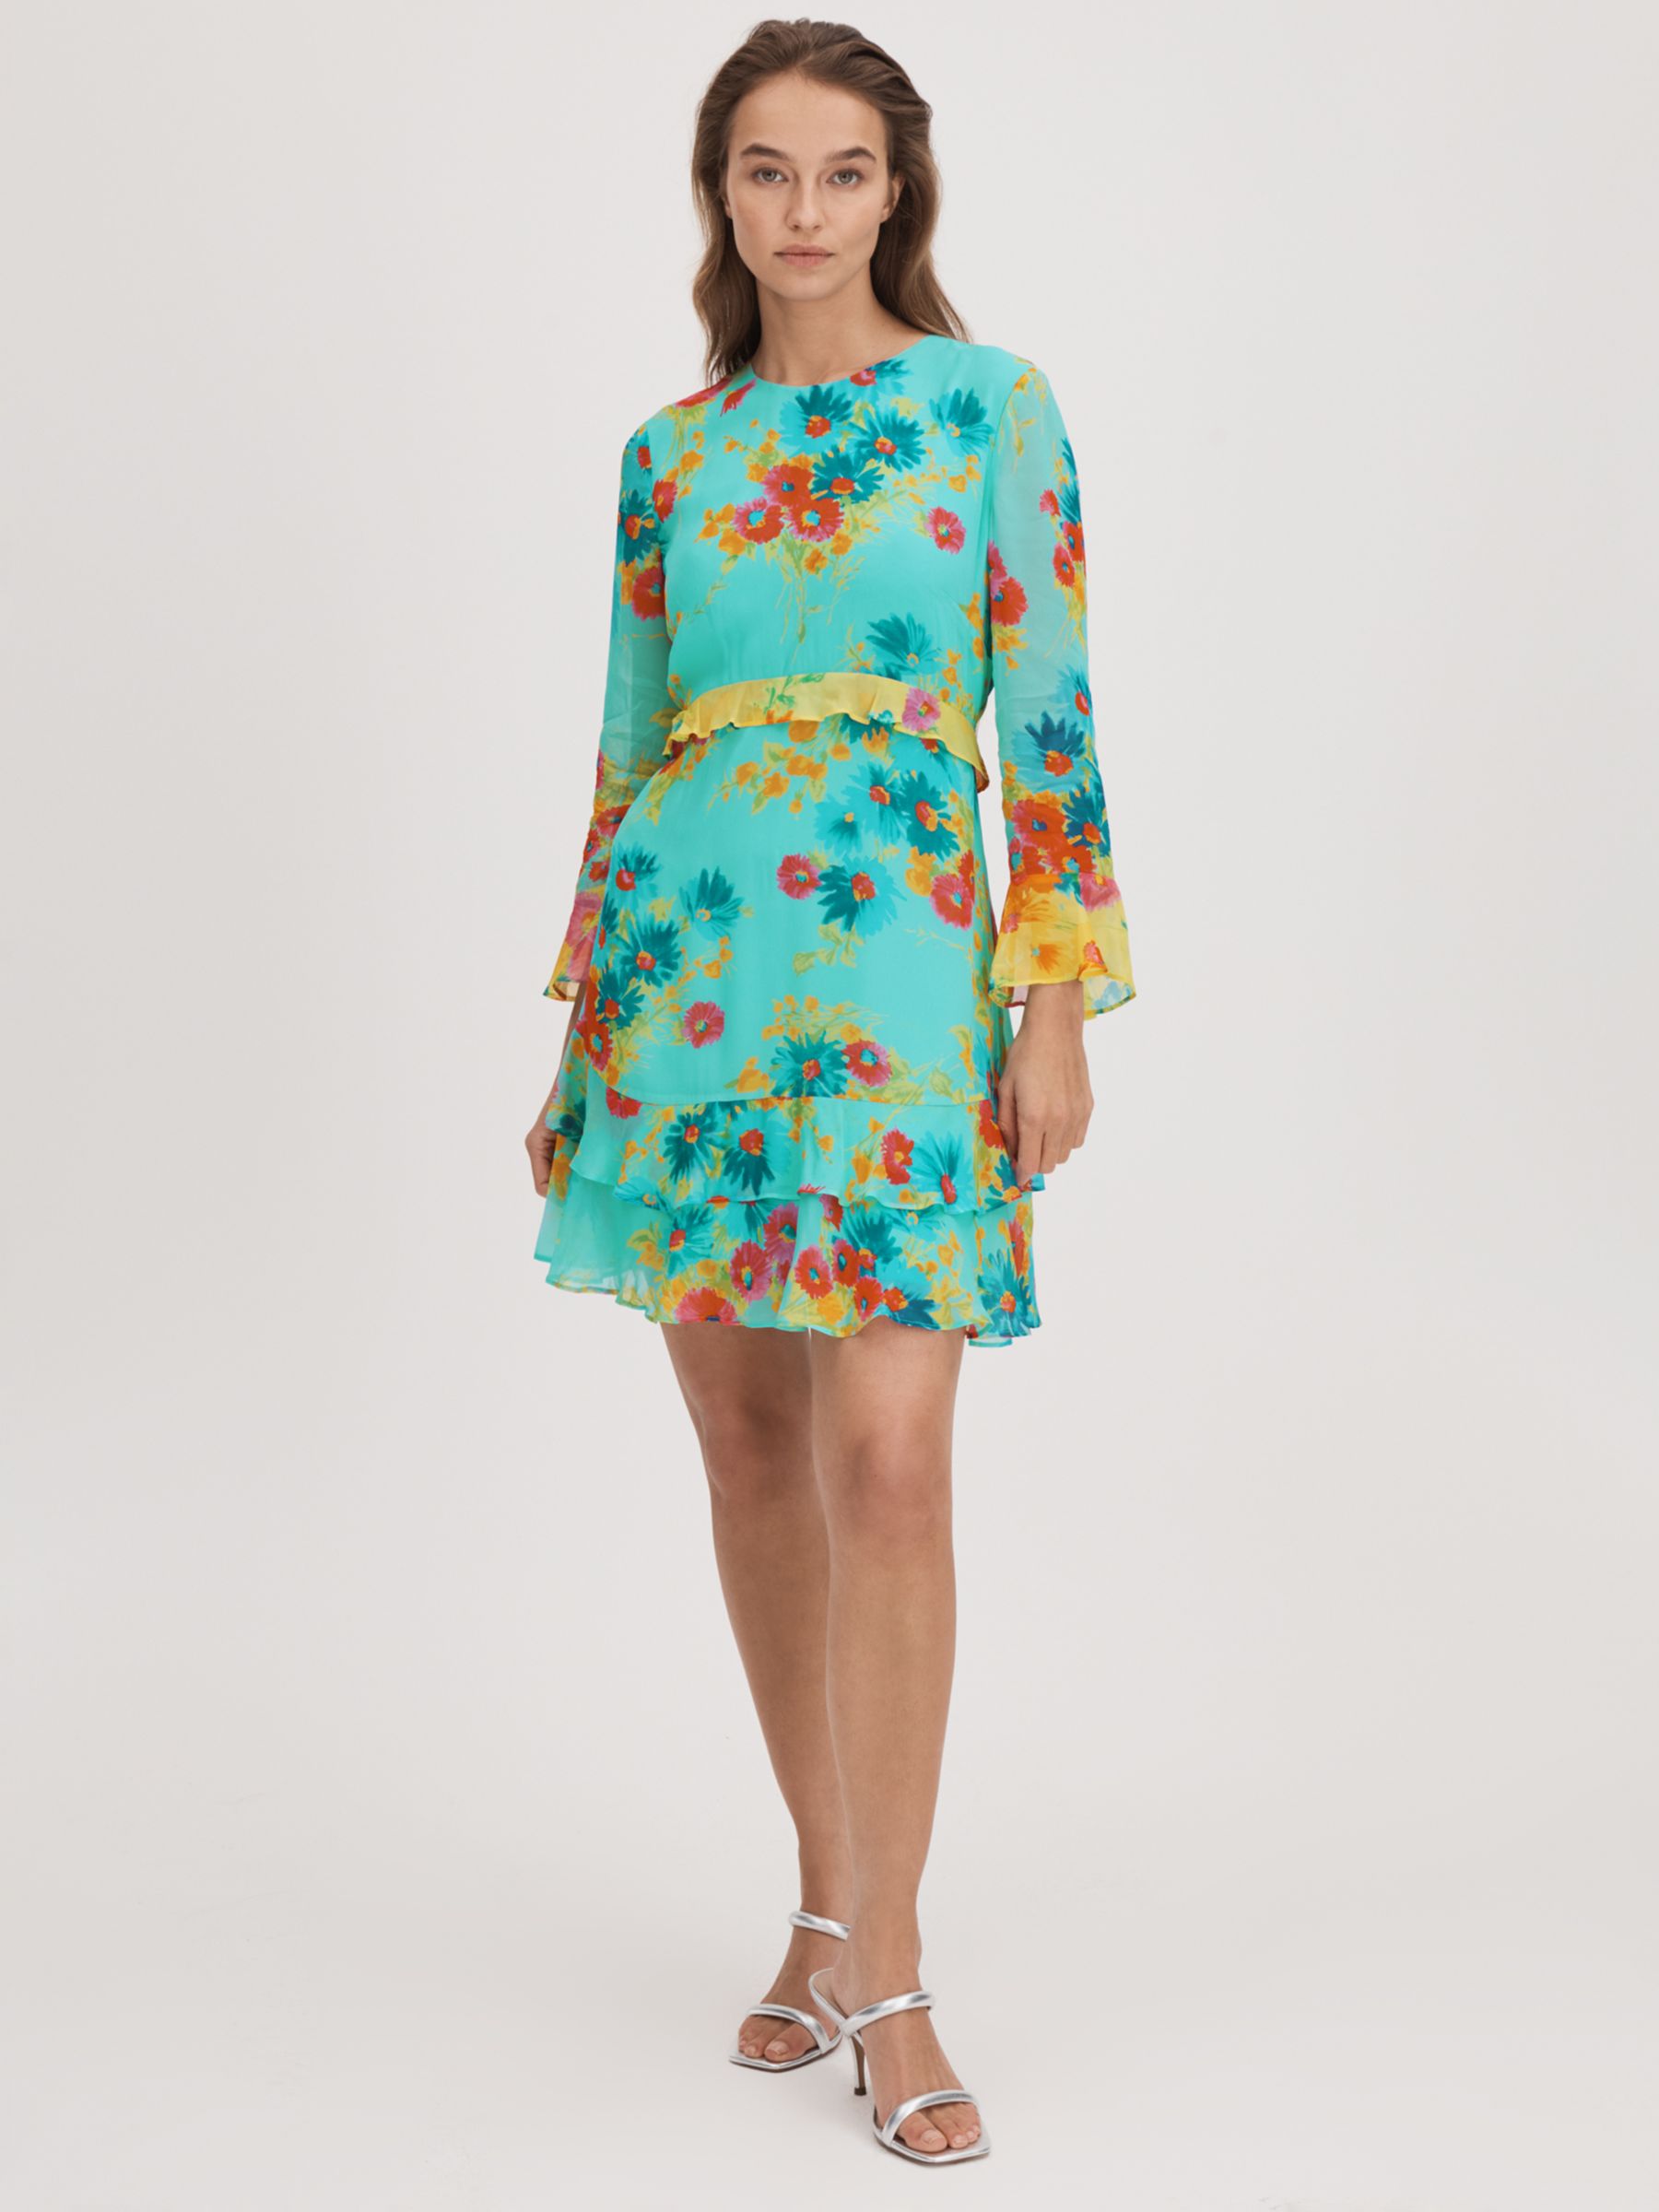 FLORERE Ruffle Contrast Mini Dress, Turquoise/Multi, 14